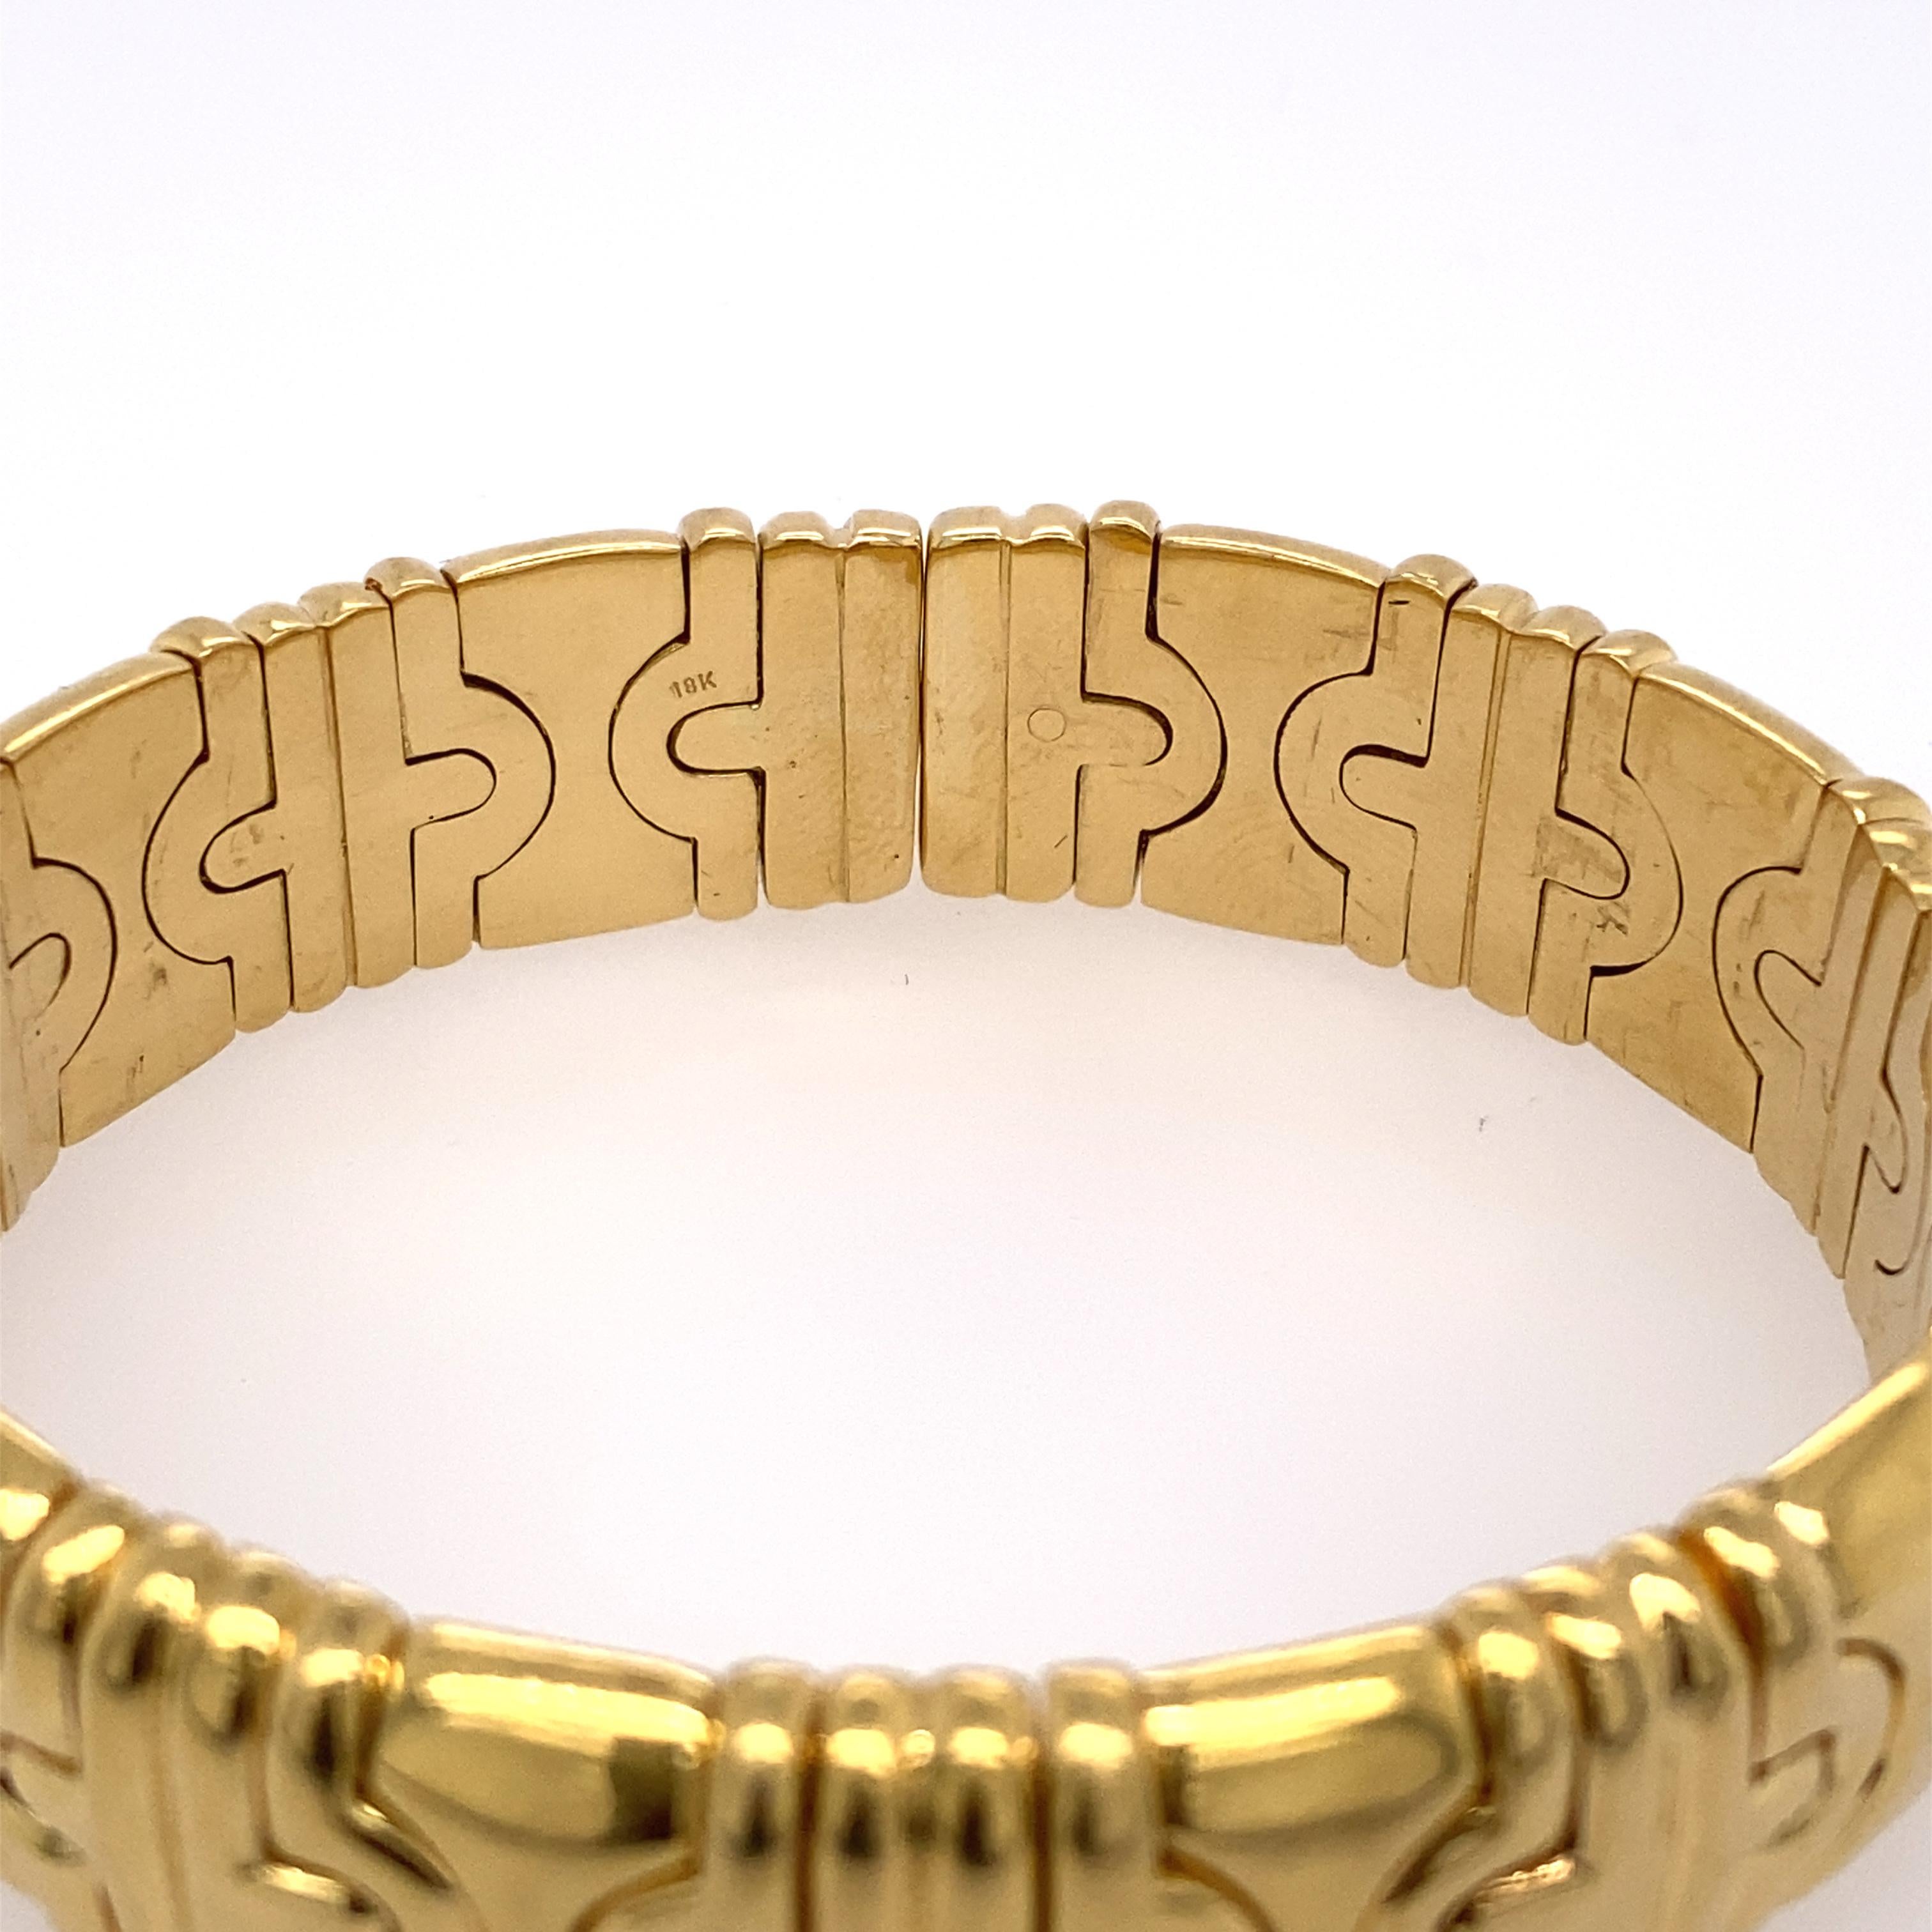 Classic Parentesi 18k yellow gold bracelet by Bvlgari. Bracelet will fit approx. 6.5